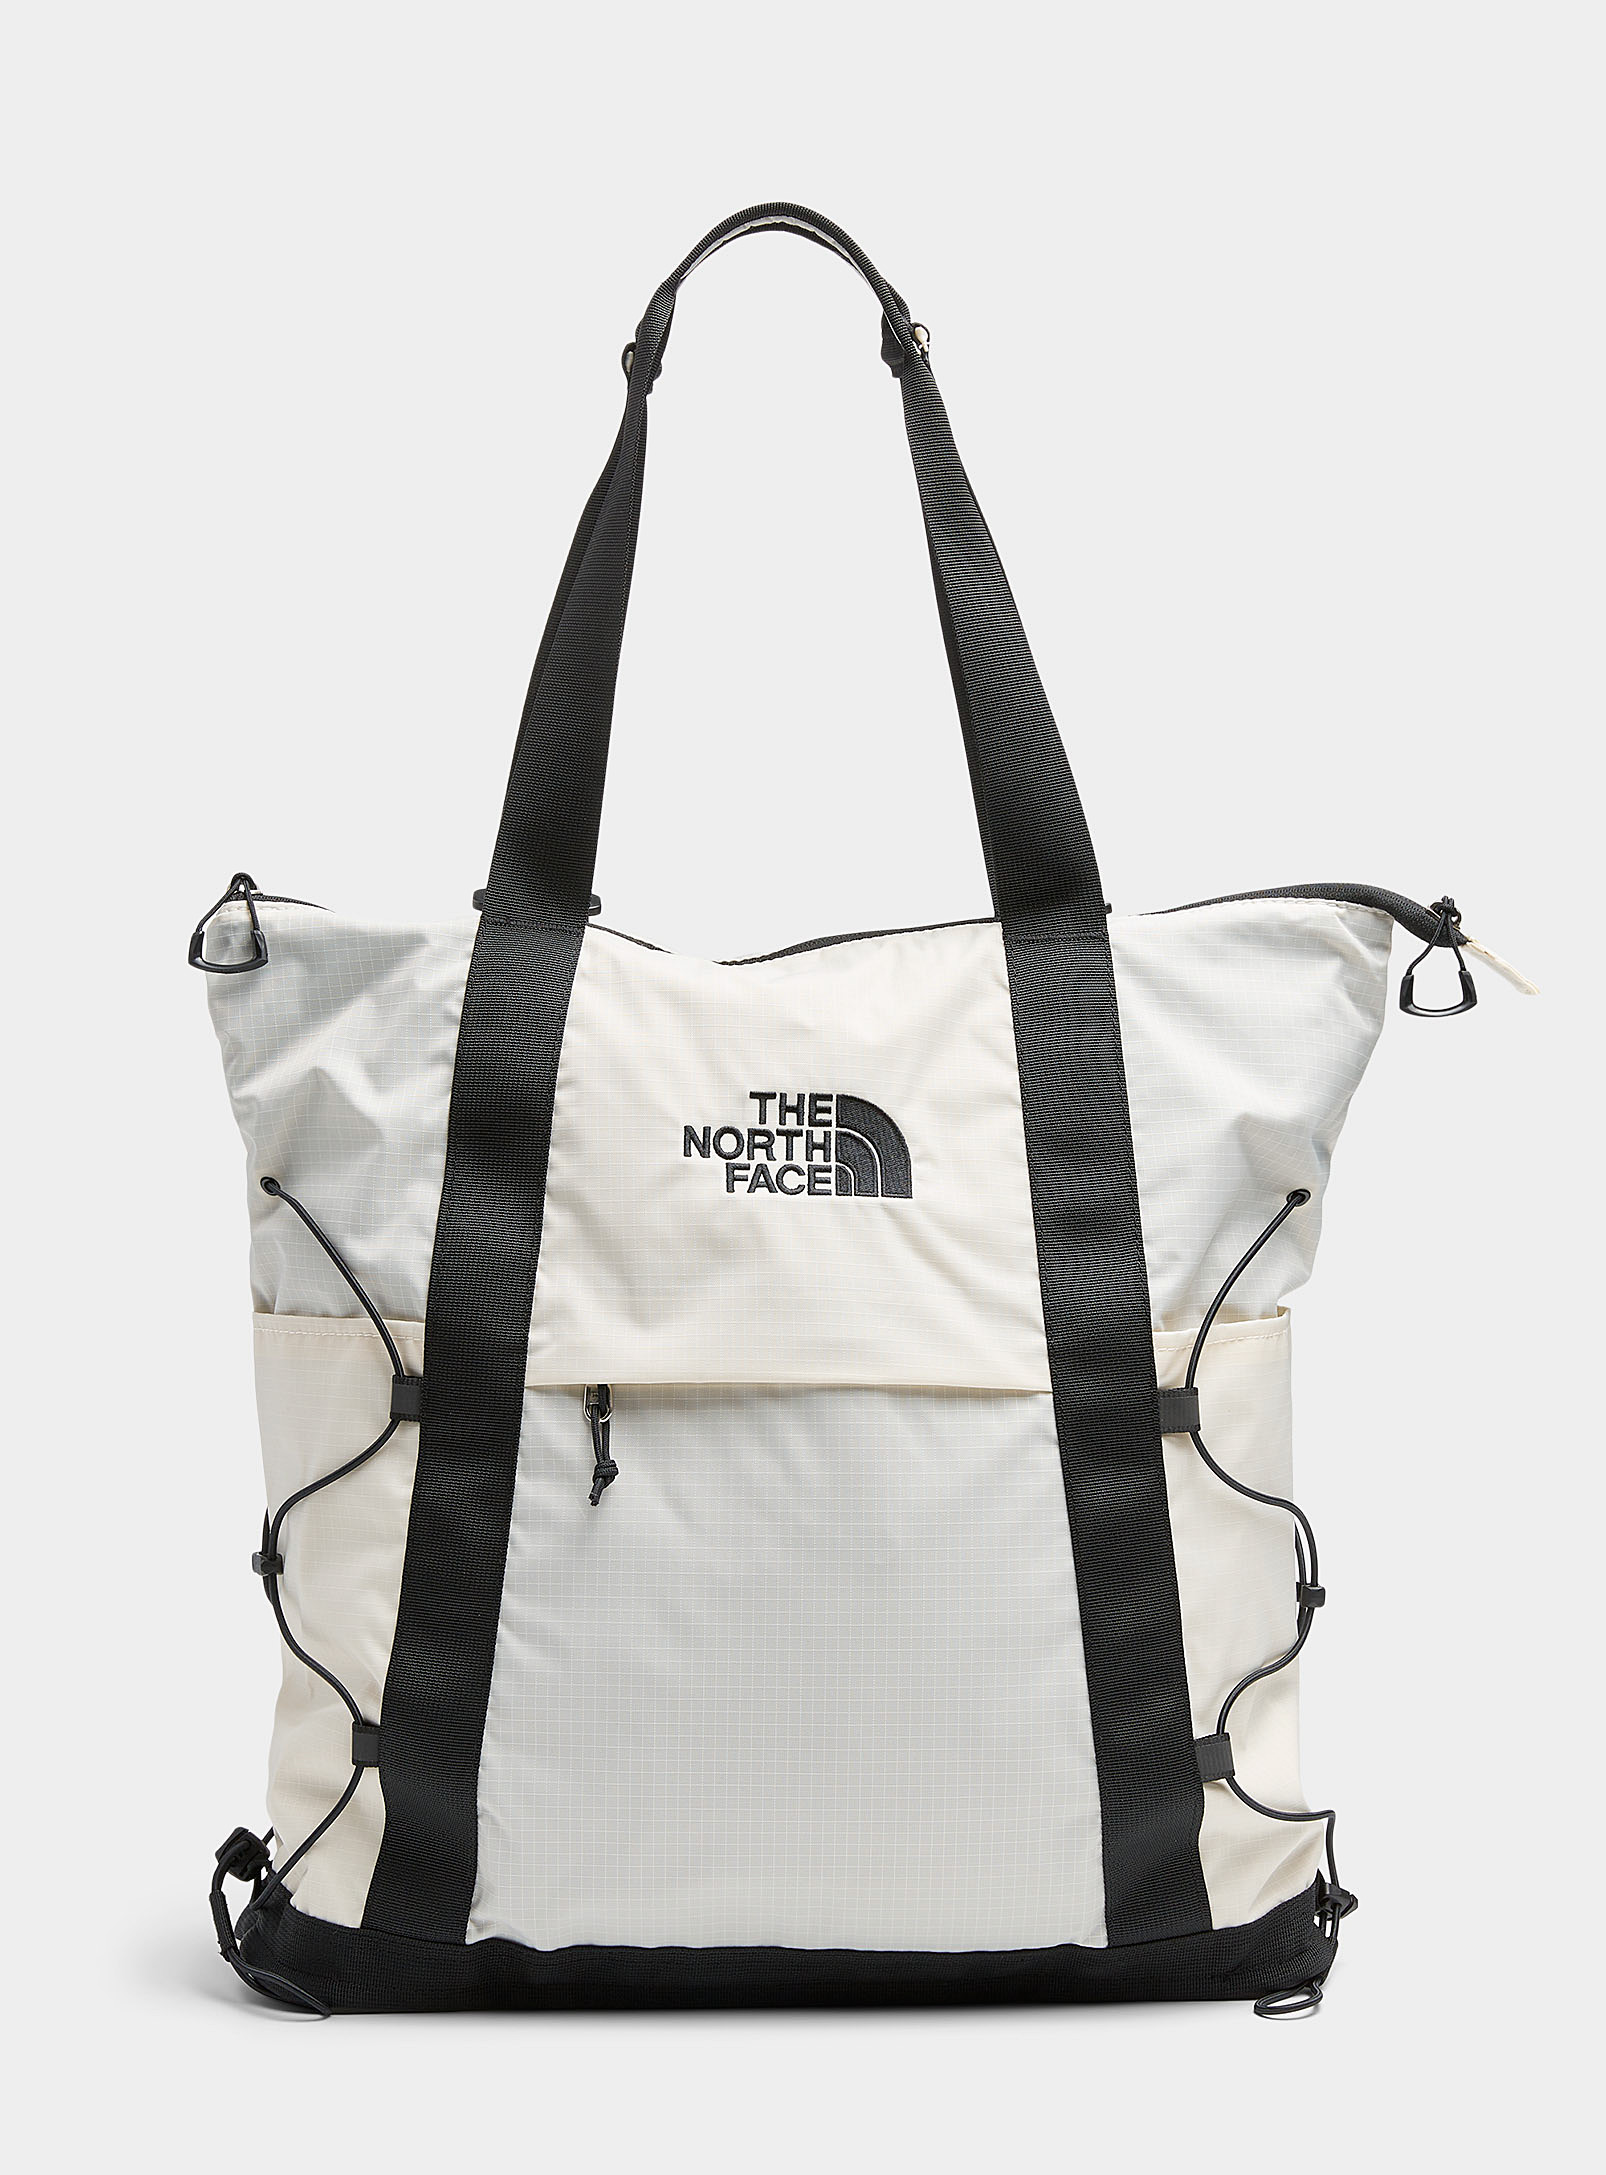 The North Face - Men's Borealis tote bag